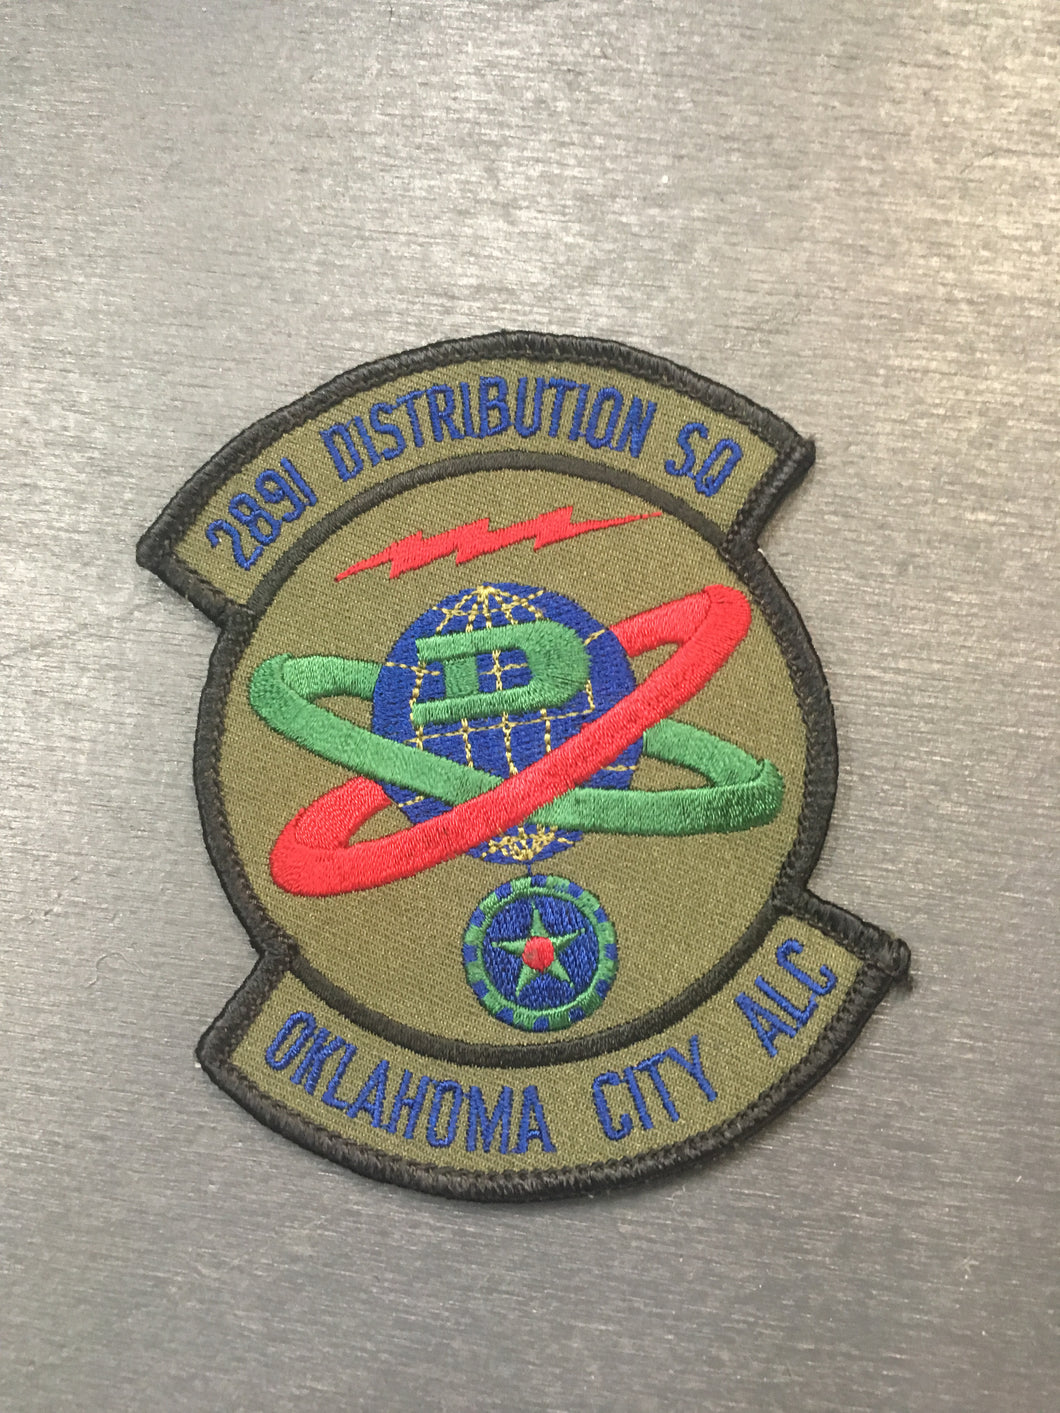 Unique~USAF 2891 Distribution Squadron Oklahoma City ALC Shoulder Patch approx. 4